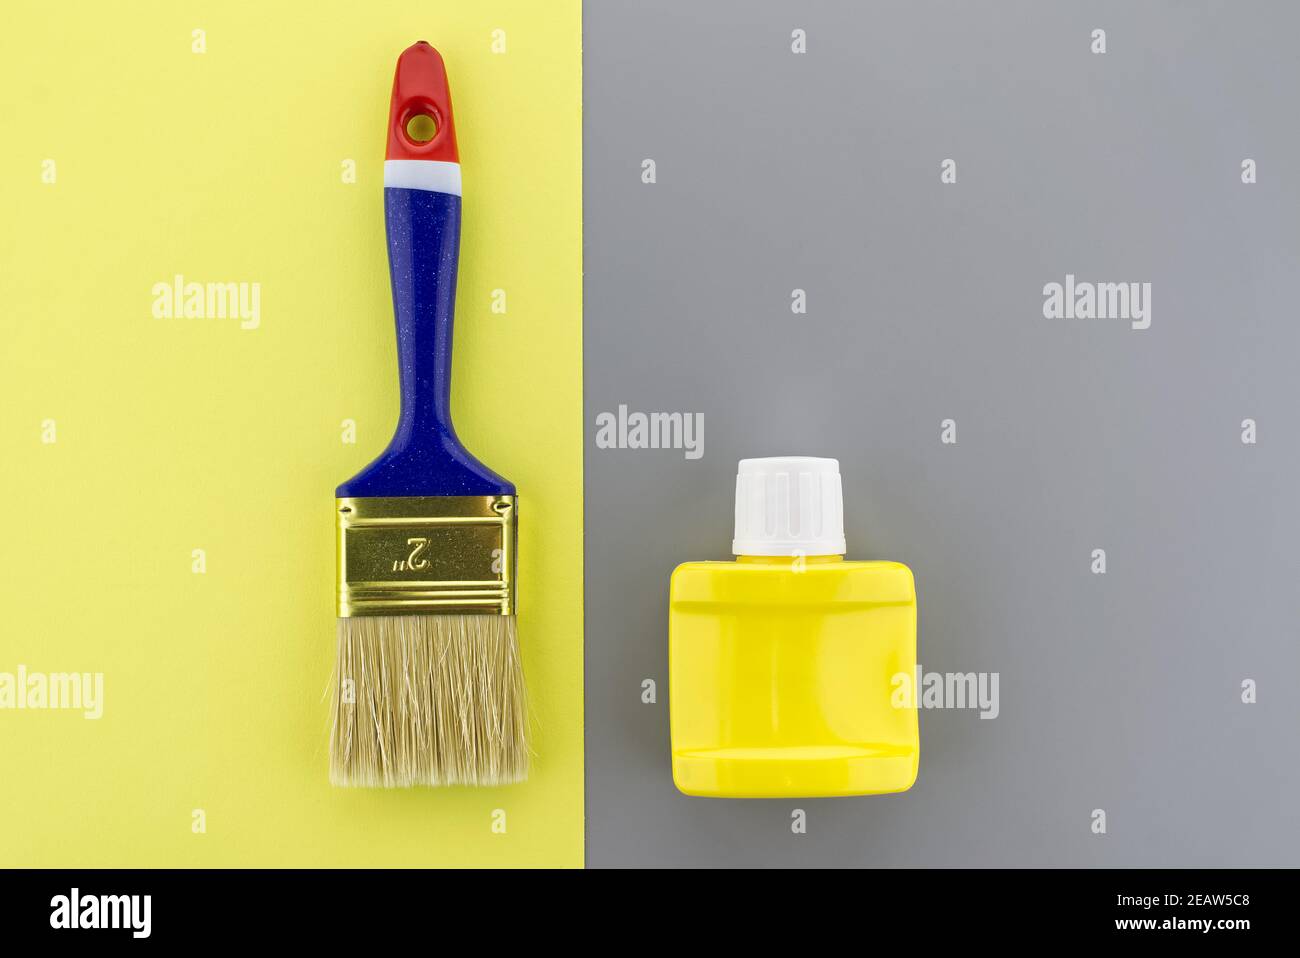 Paintbrush on two tone grey and yellow background Stock Photo